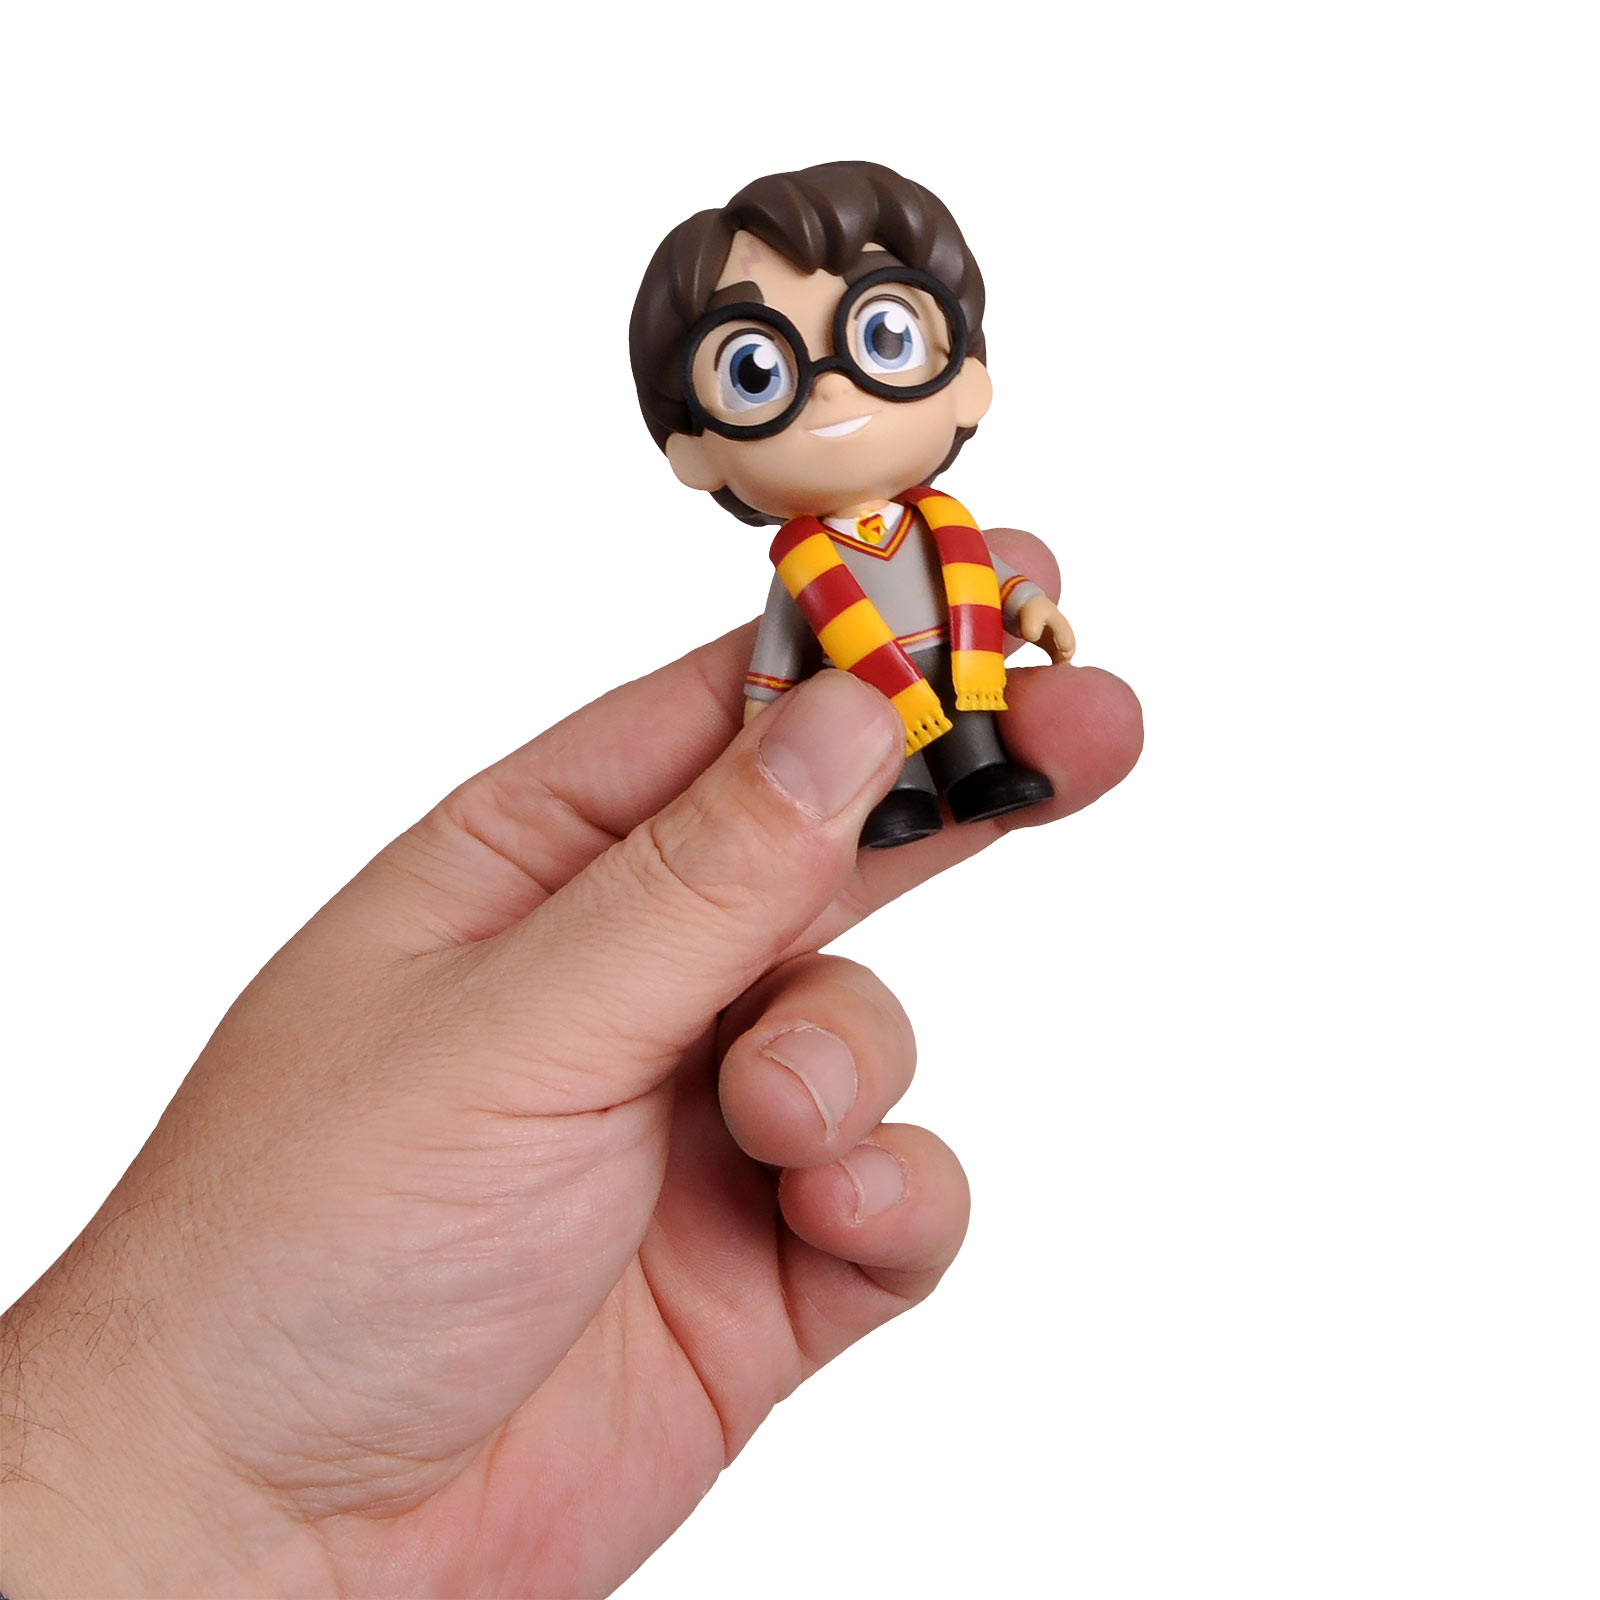 Harry Potter Gryffindor Funko Five Star Figur